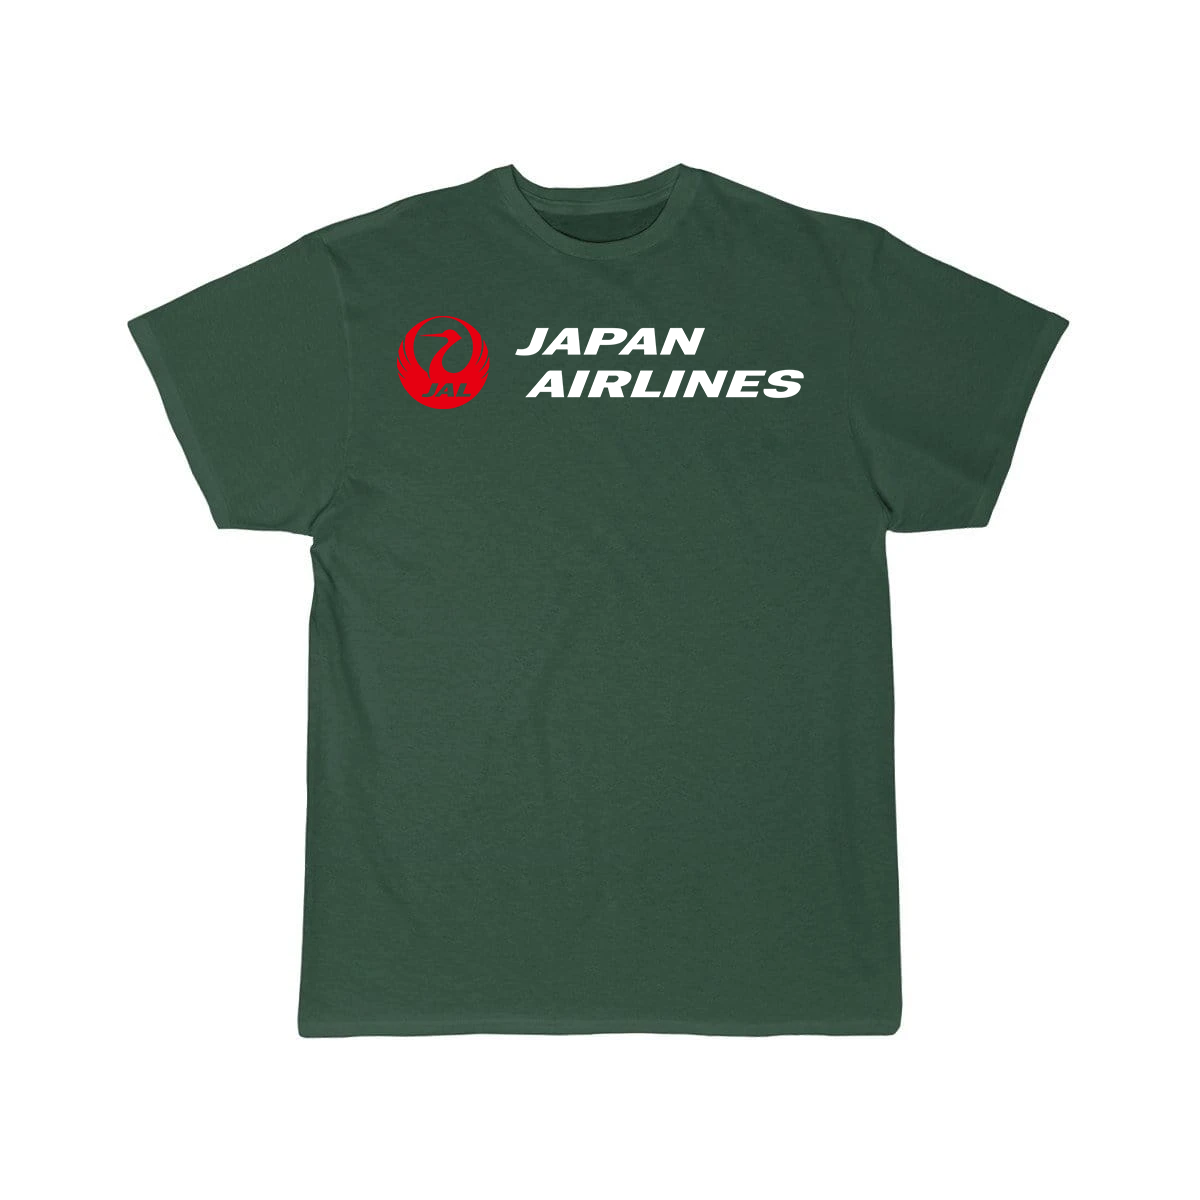 JAPAN AIRLINE T-SHIRT